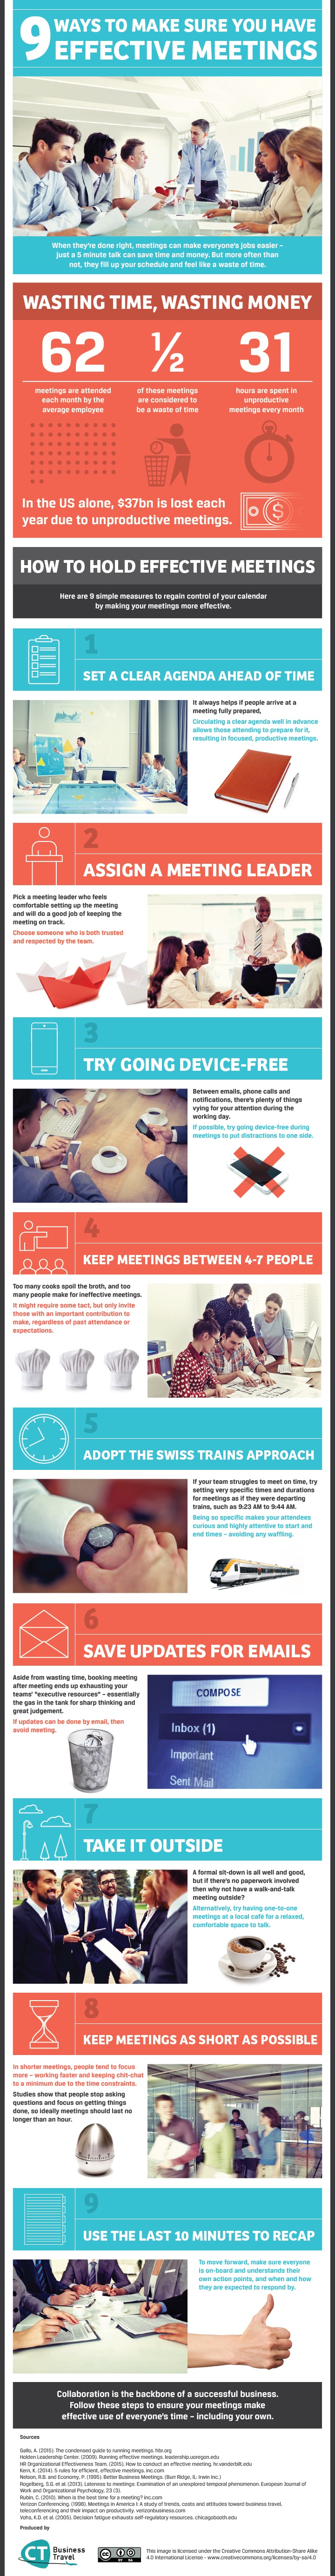 effective-meetings-infographic.jpg